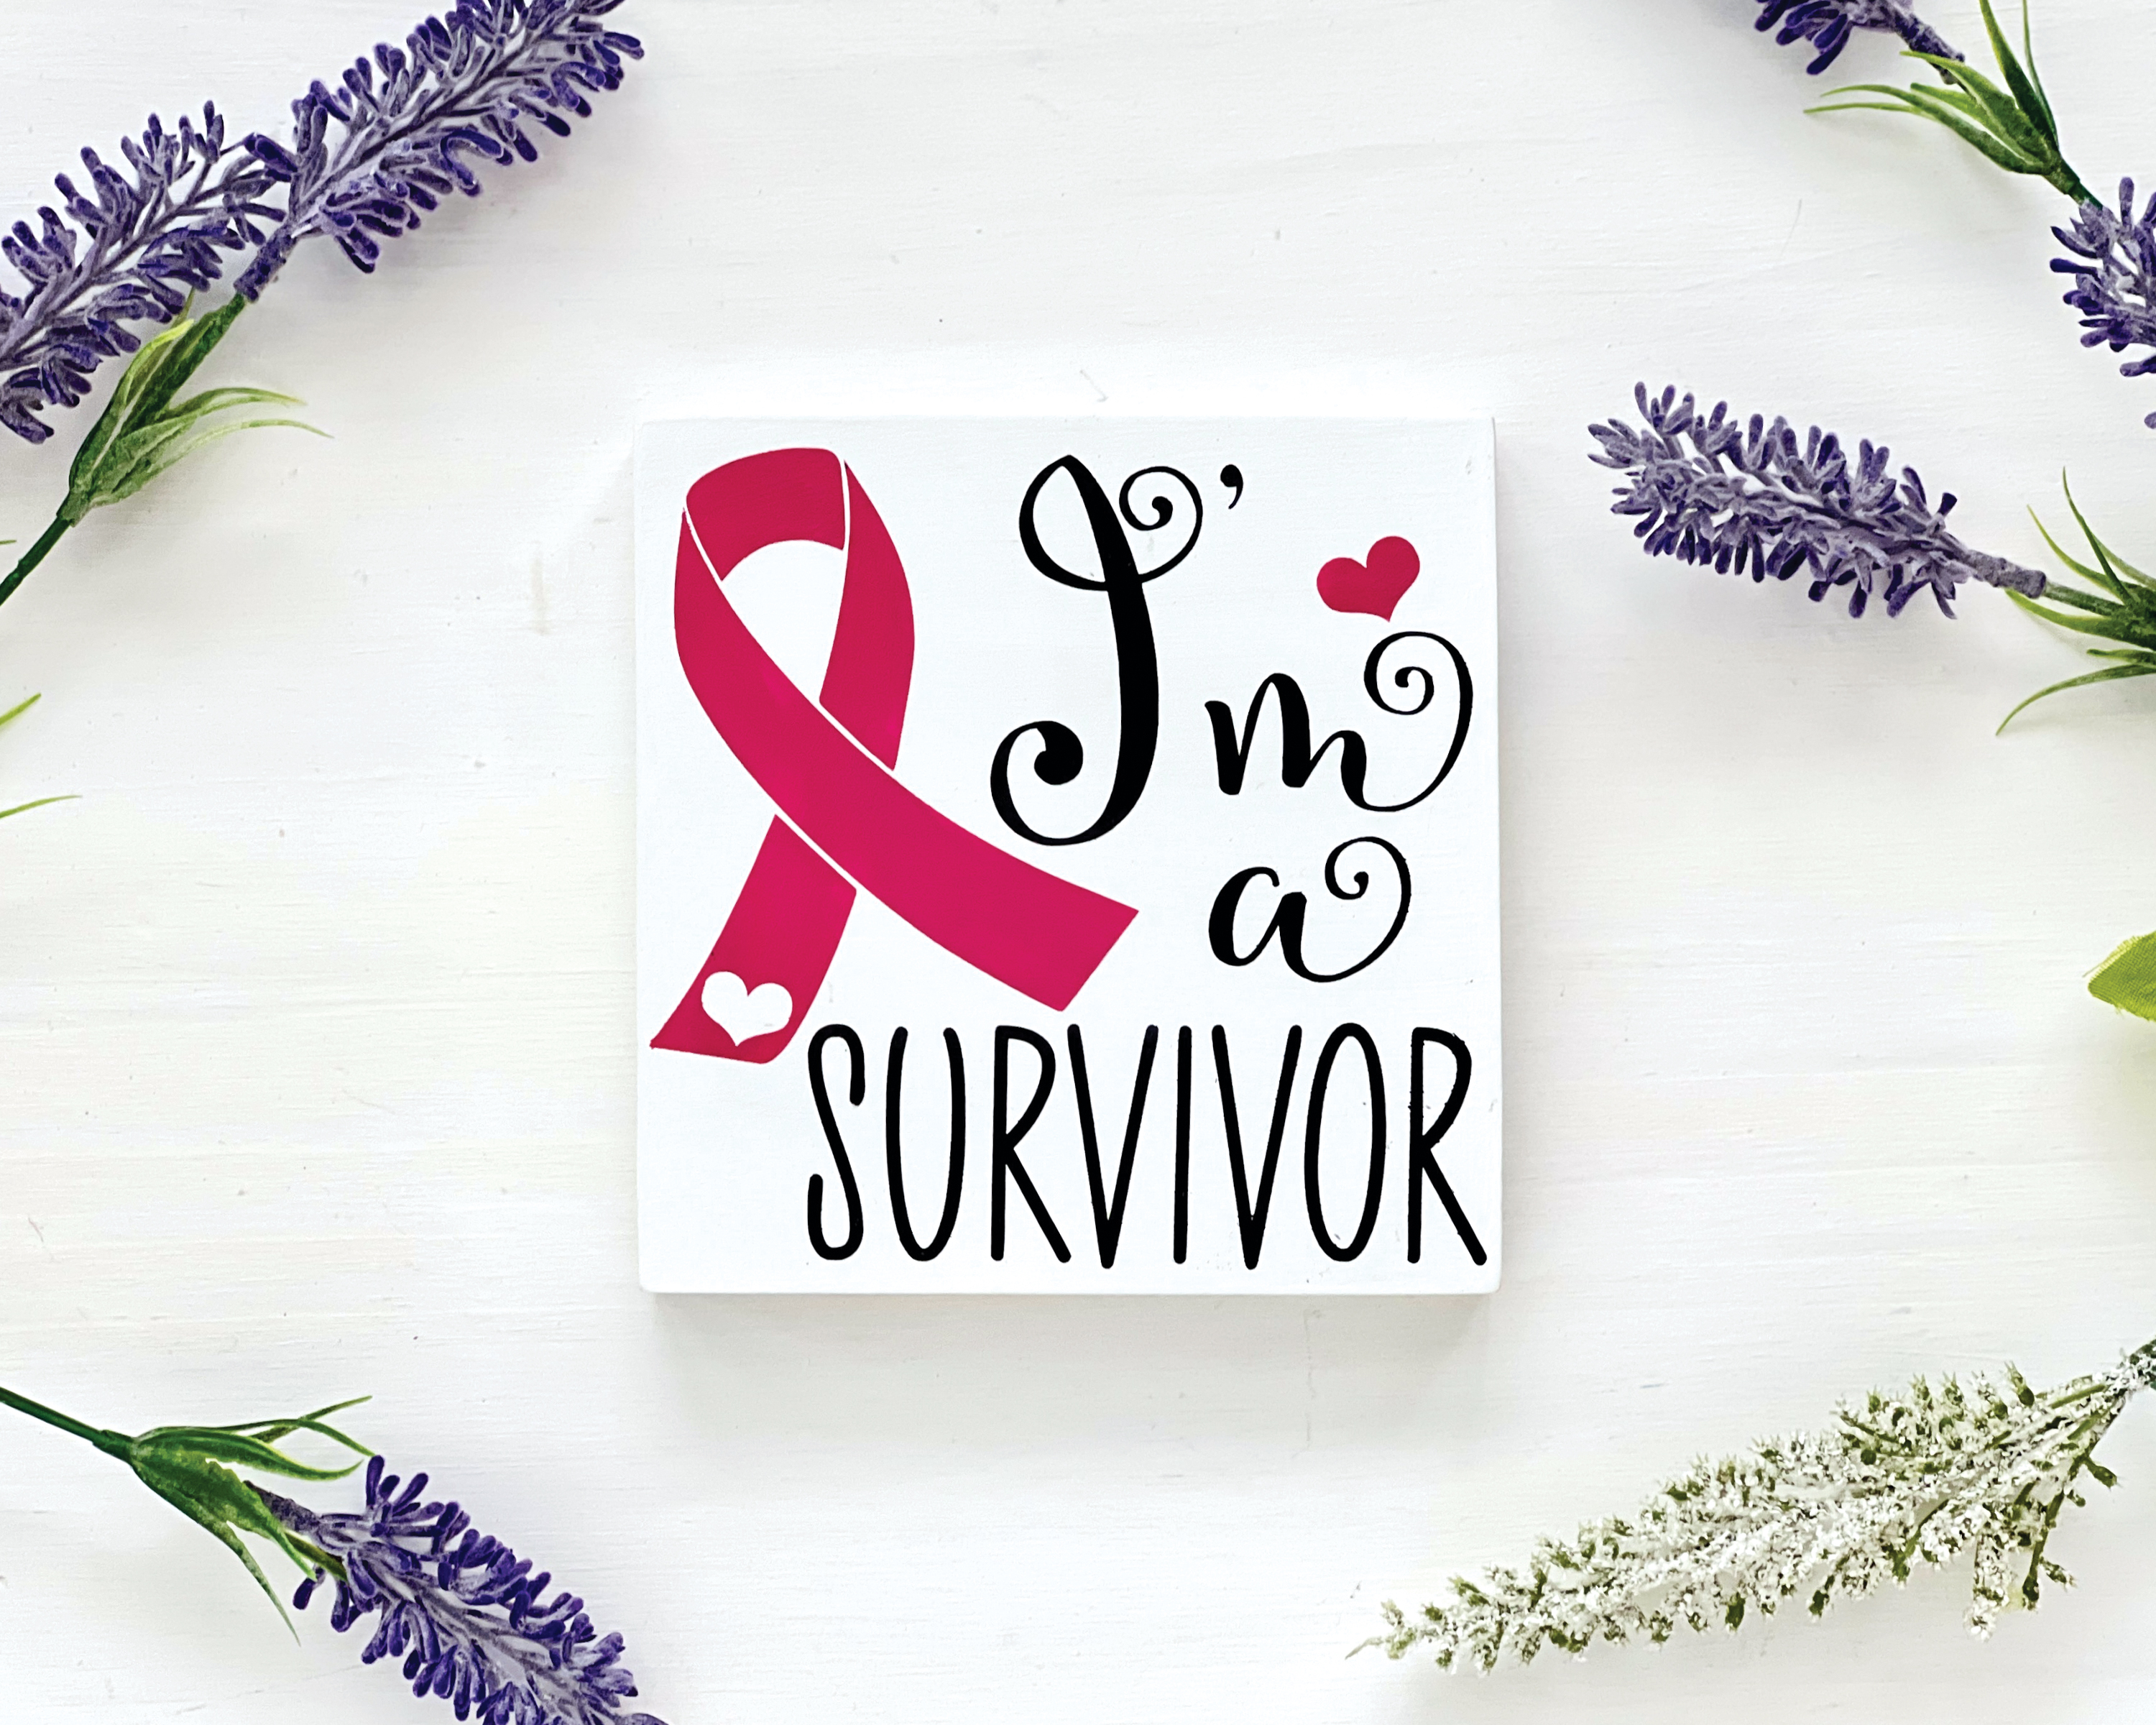 Breast Cancer Survivor Organizes Body Paint Photoshoot